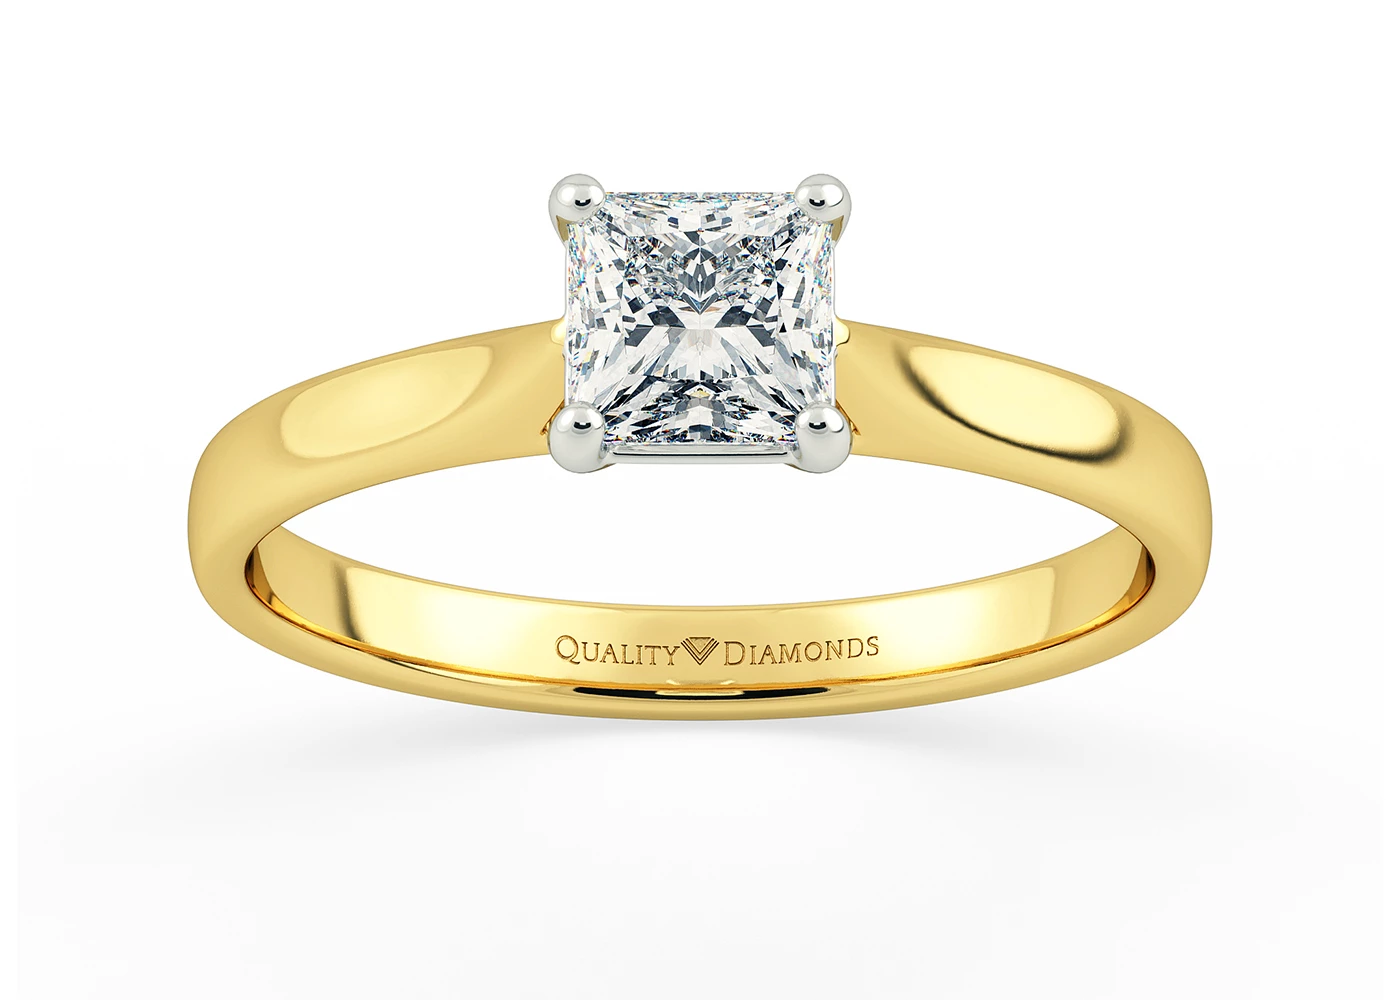 Princess Clara Diamond Ring in 9K Yellow Gold